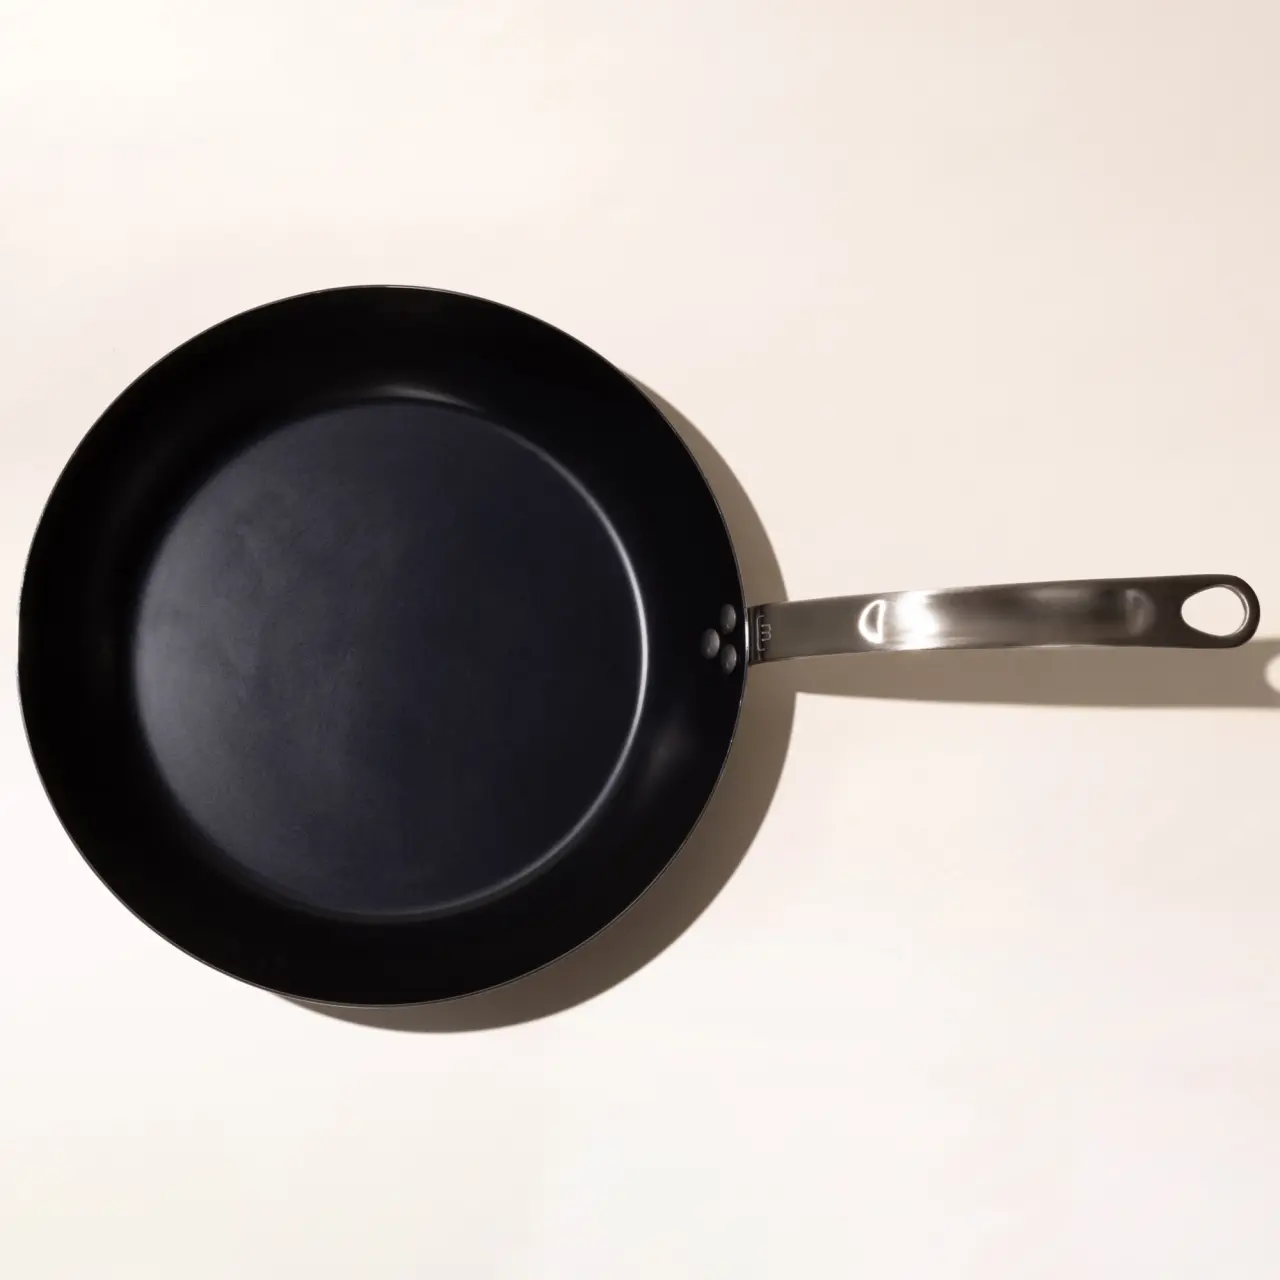 carbon steel frying pan top